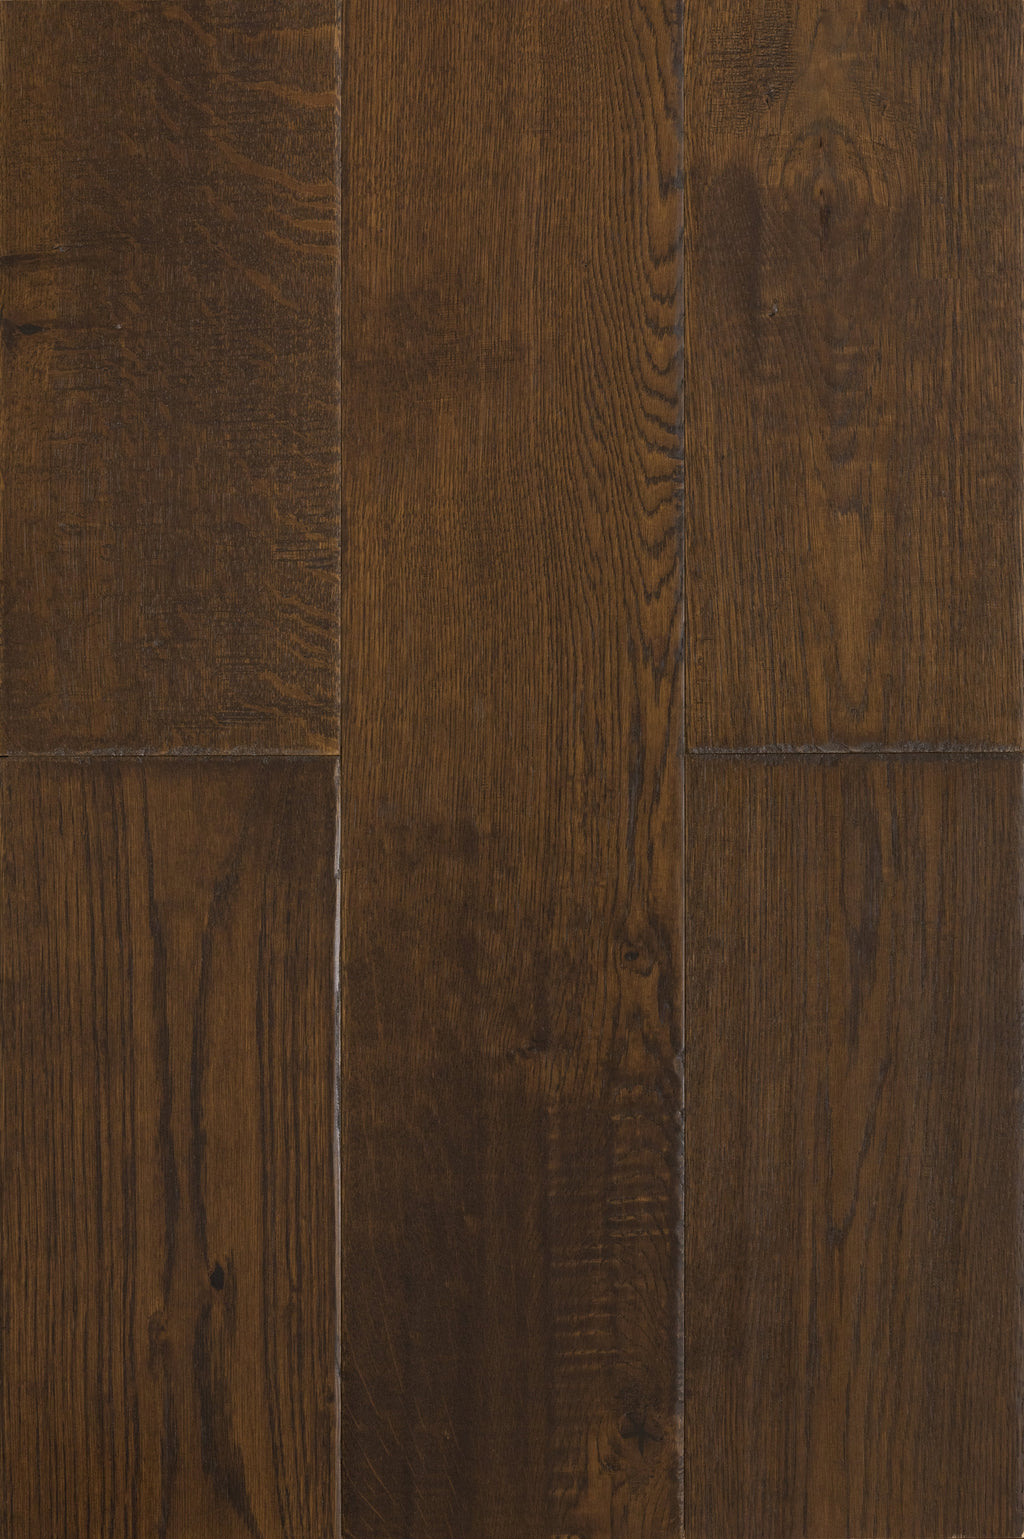 East West Furniture SP-7OH01 Sango Premier Engineered Hardwood Flooring - European Oak - 1/2 in x 7 in x Random Length Handscraped, 26.24 sqft/box, Chestnut